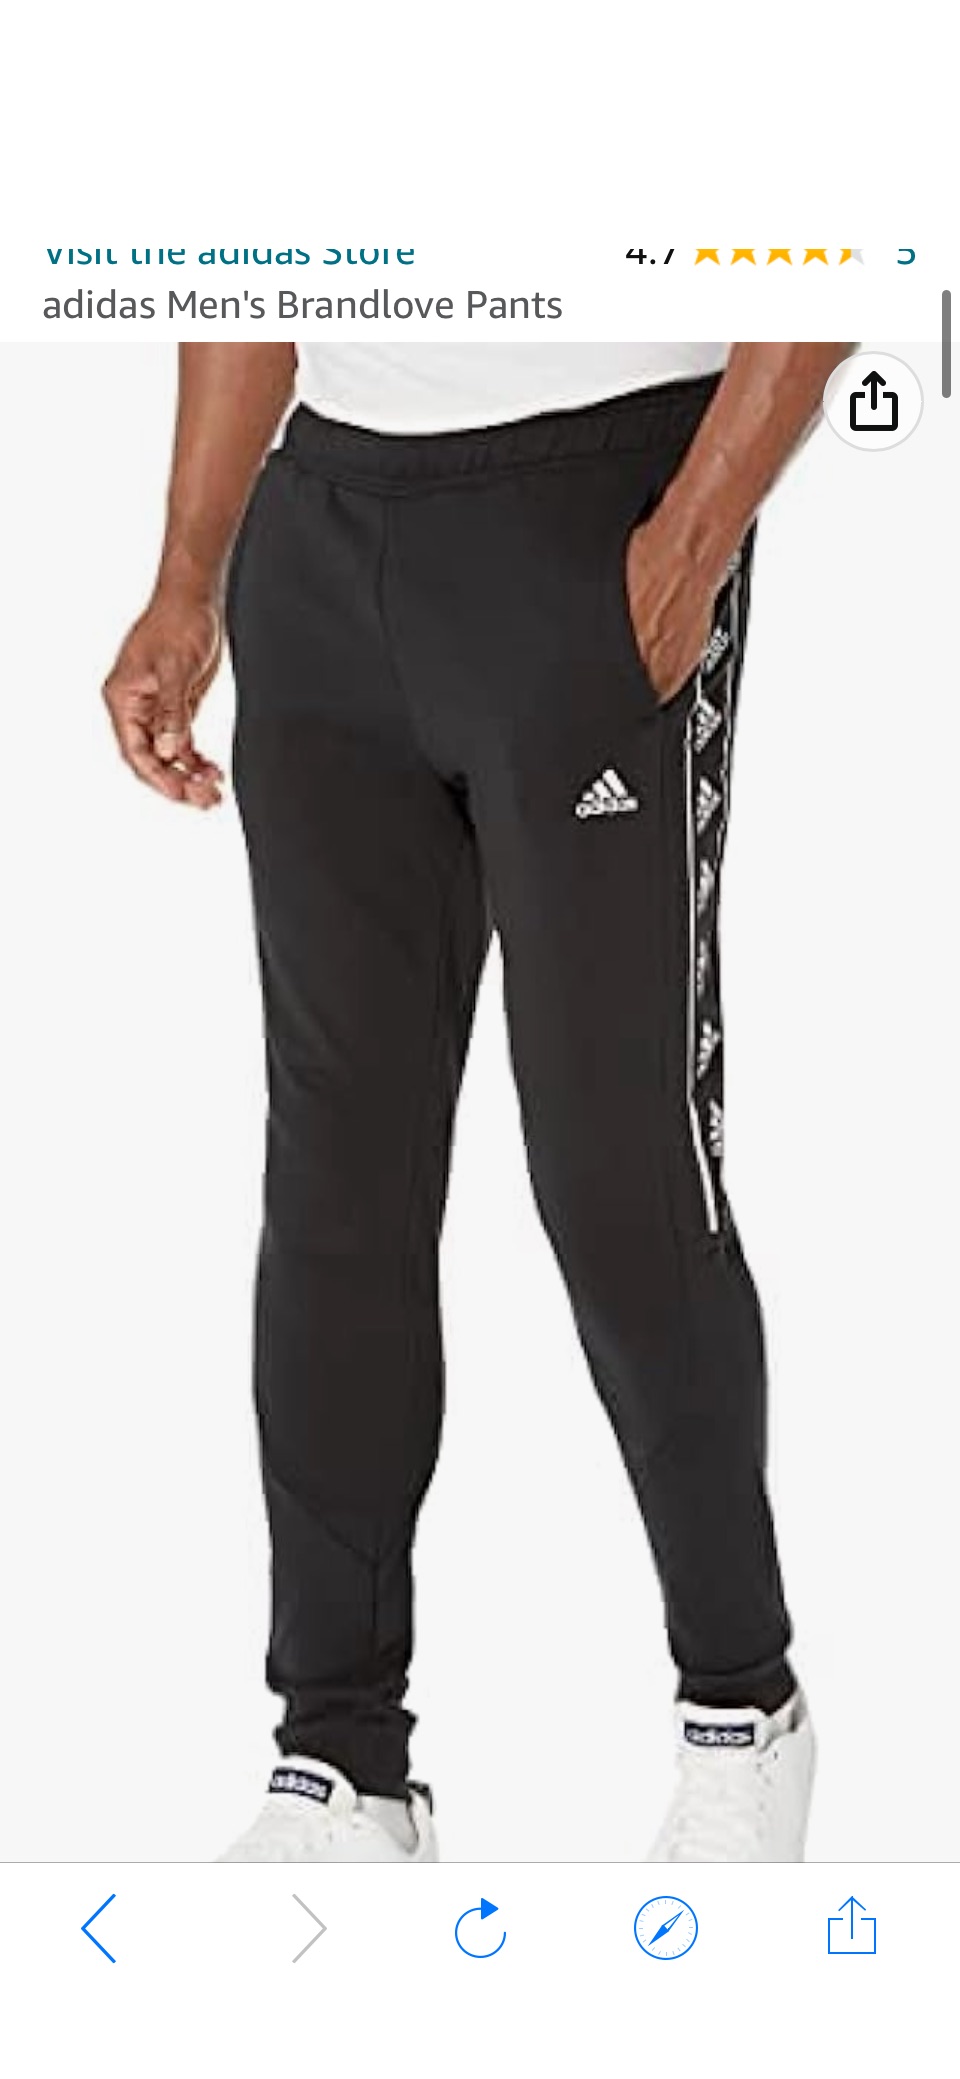 adidas Men's Brandlove Pants, Black, X-Large at Amazon Men’s Clothing store原价55